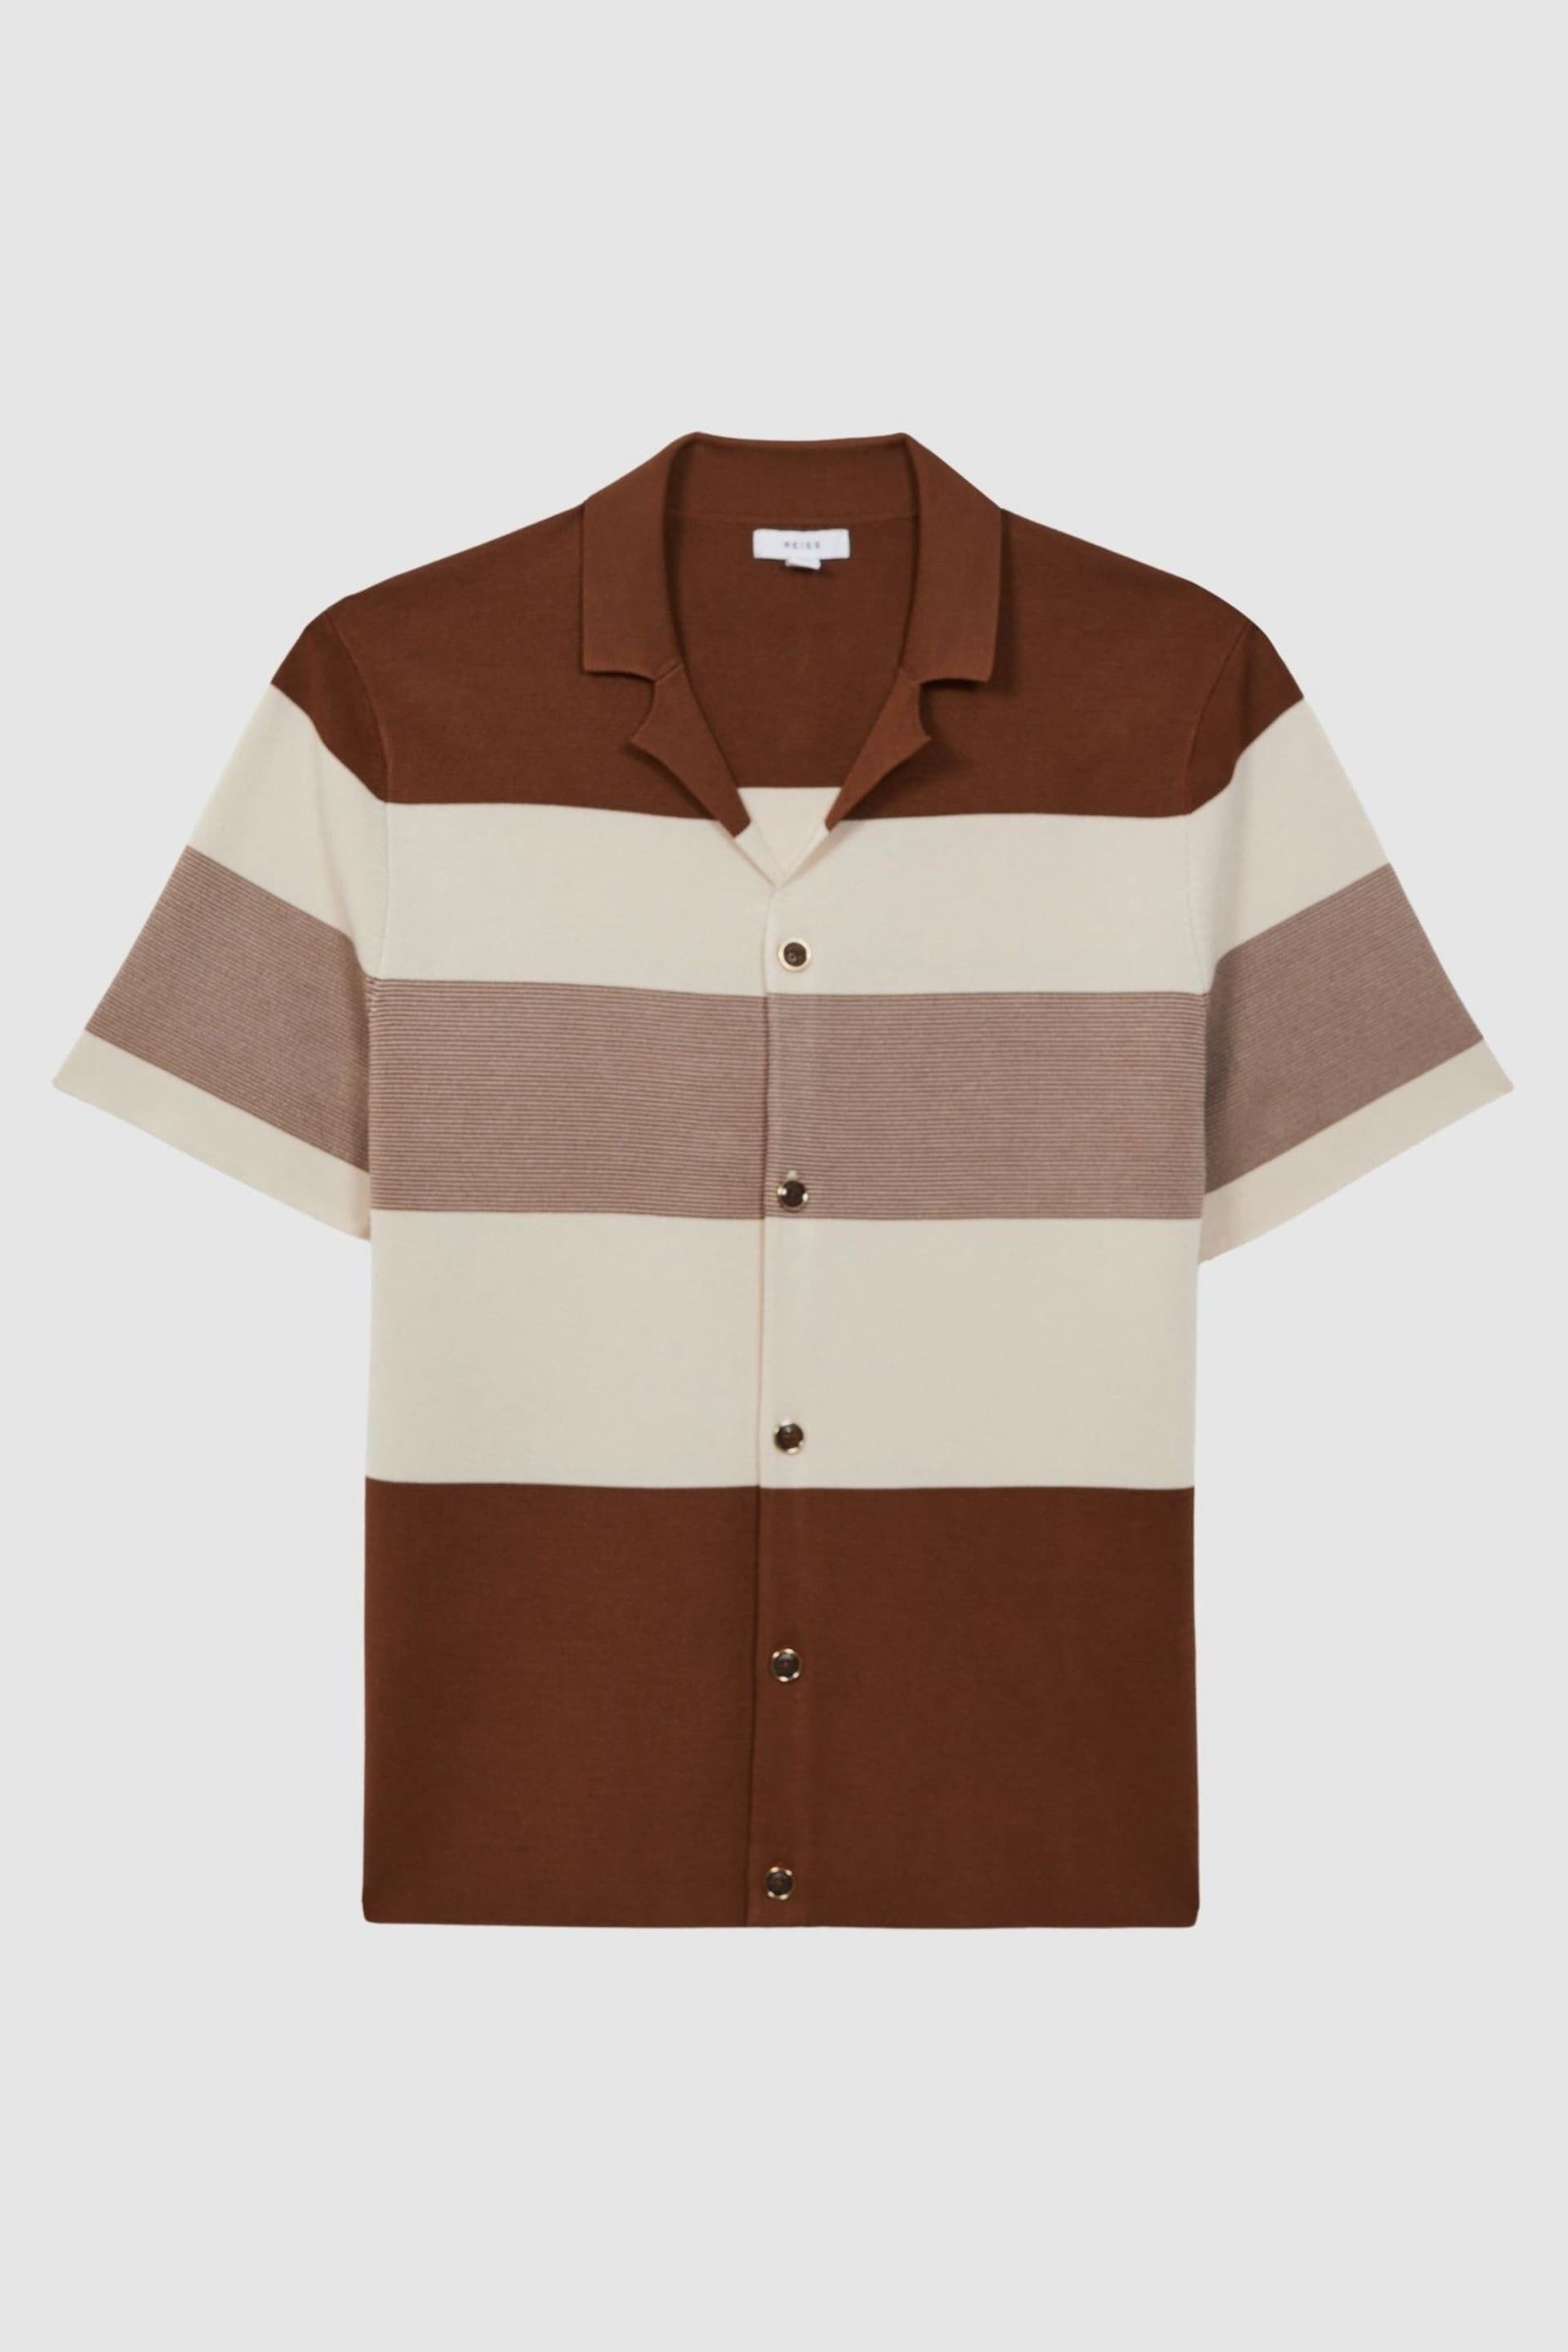 Reiss Tobacco Seville Striped Cuban Collar Button Through T-Shirt - Image 2 of 4